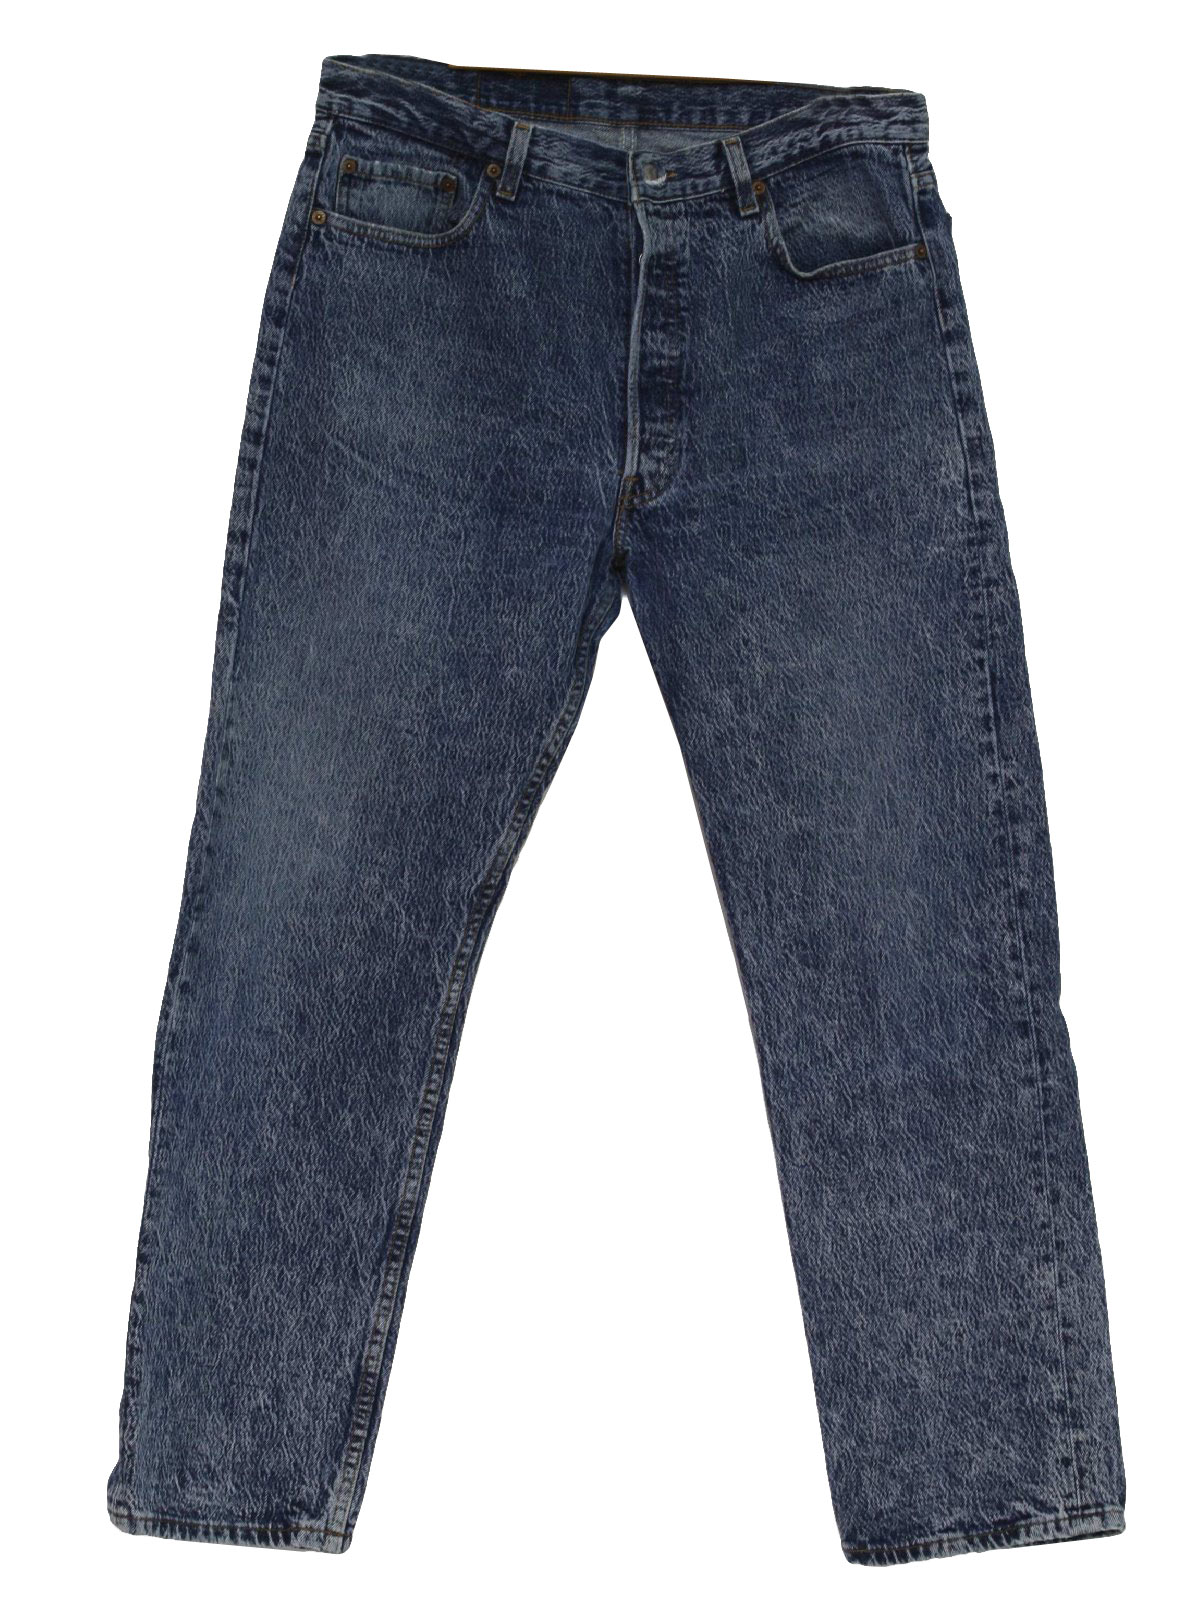 Vintage 80s Pants: 80s -Levis- Mens dark blue acid washed cotton denim ...